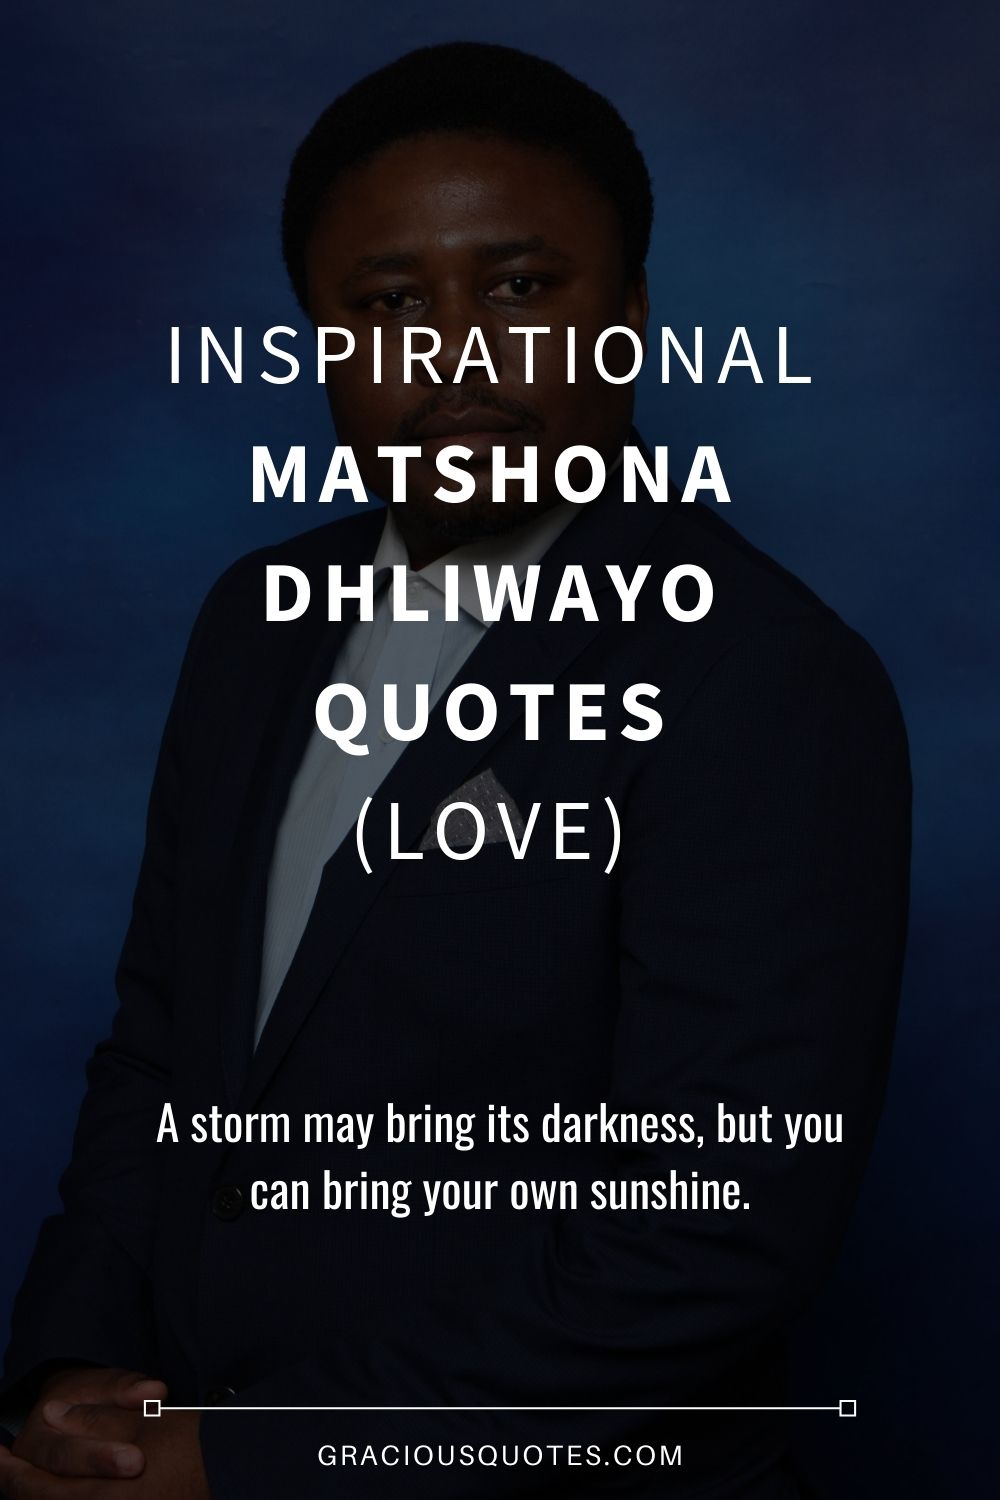 Inspirational Matshona Dhliwayo Quotes (LOVE) - Gracious Quotes